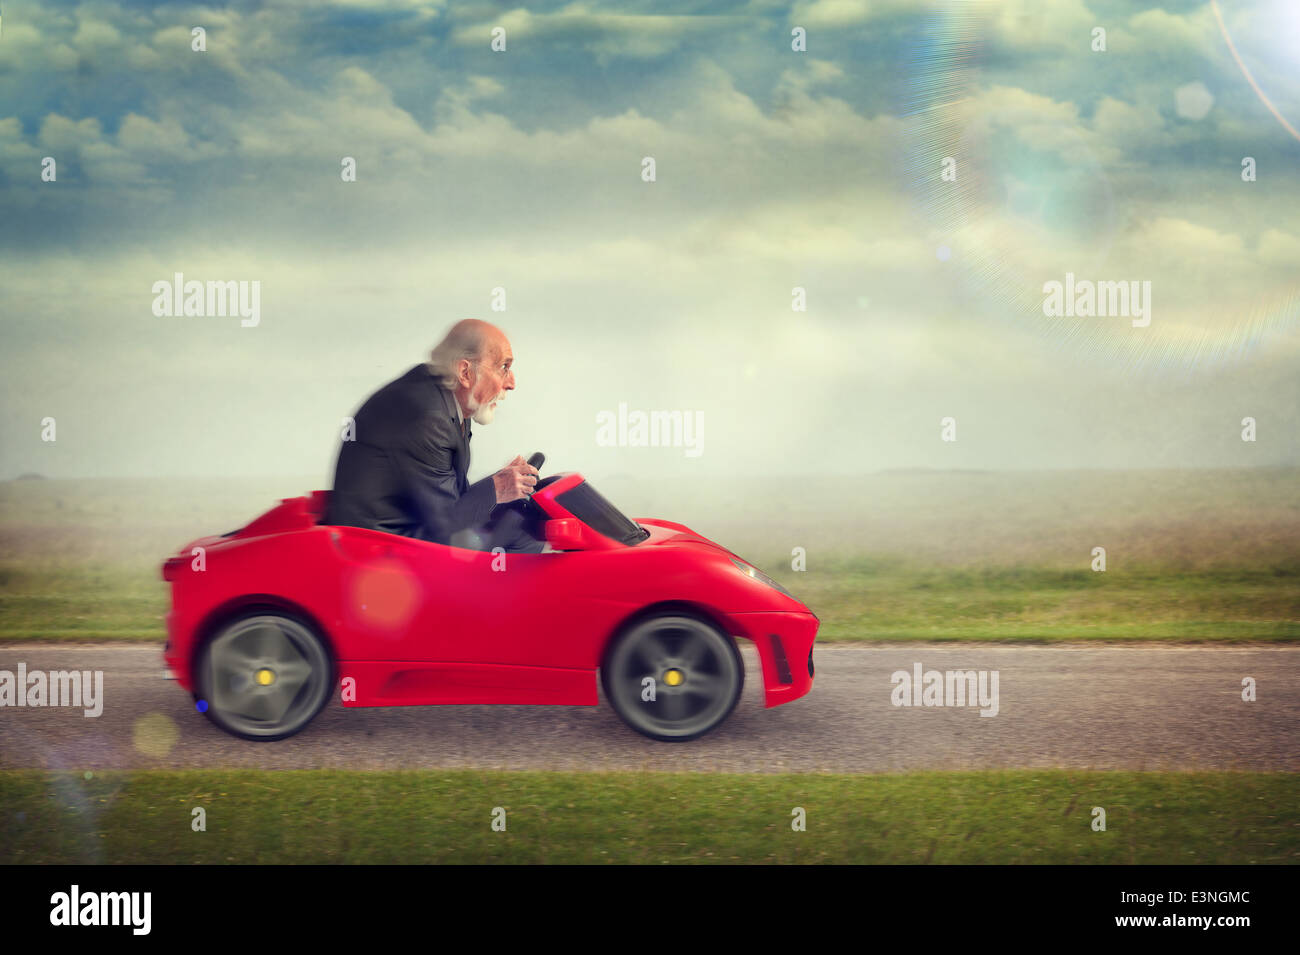 senior man enjoying driving a toy racing car Stock Photo